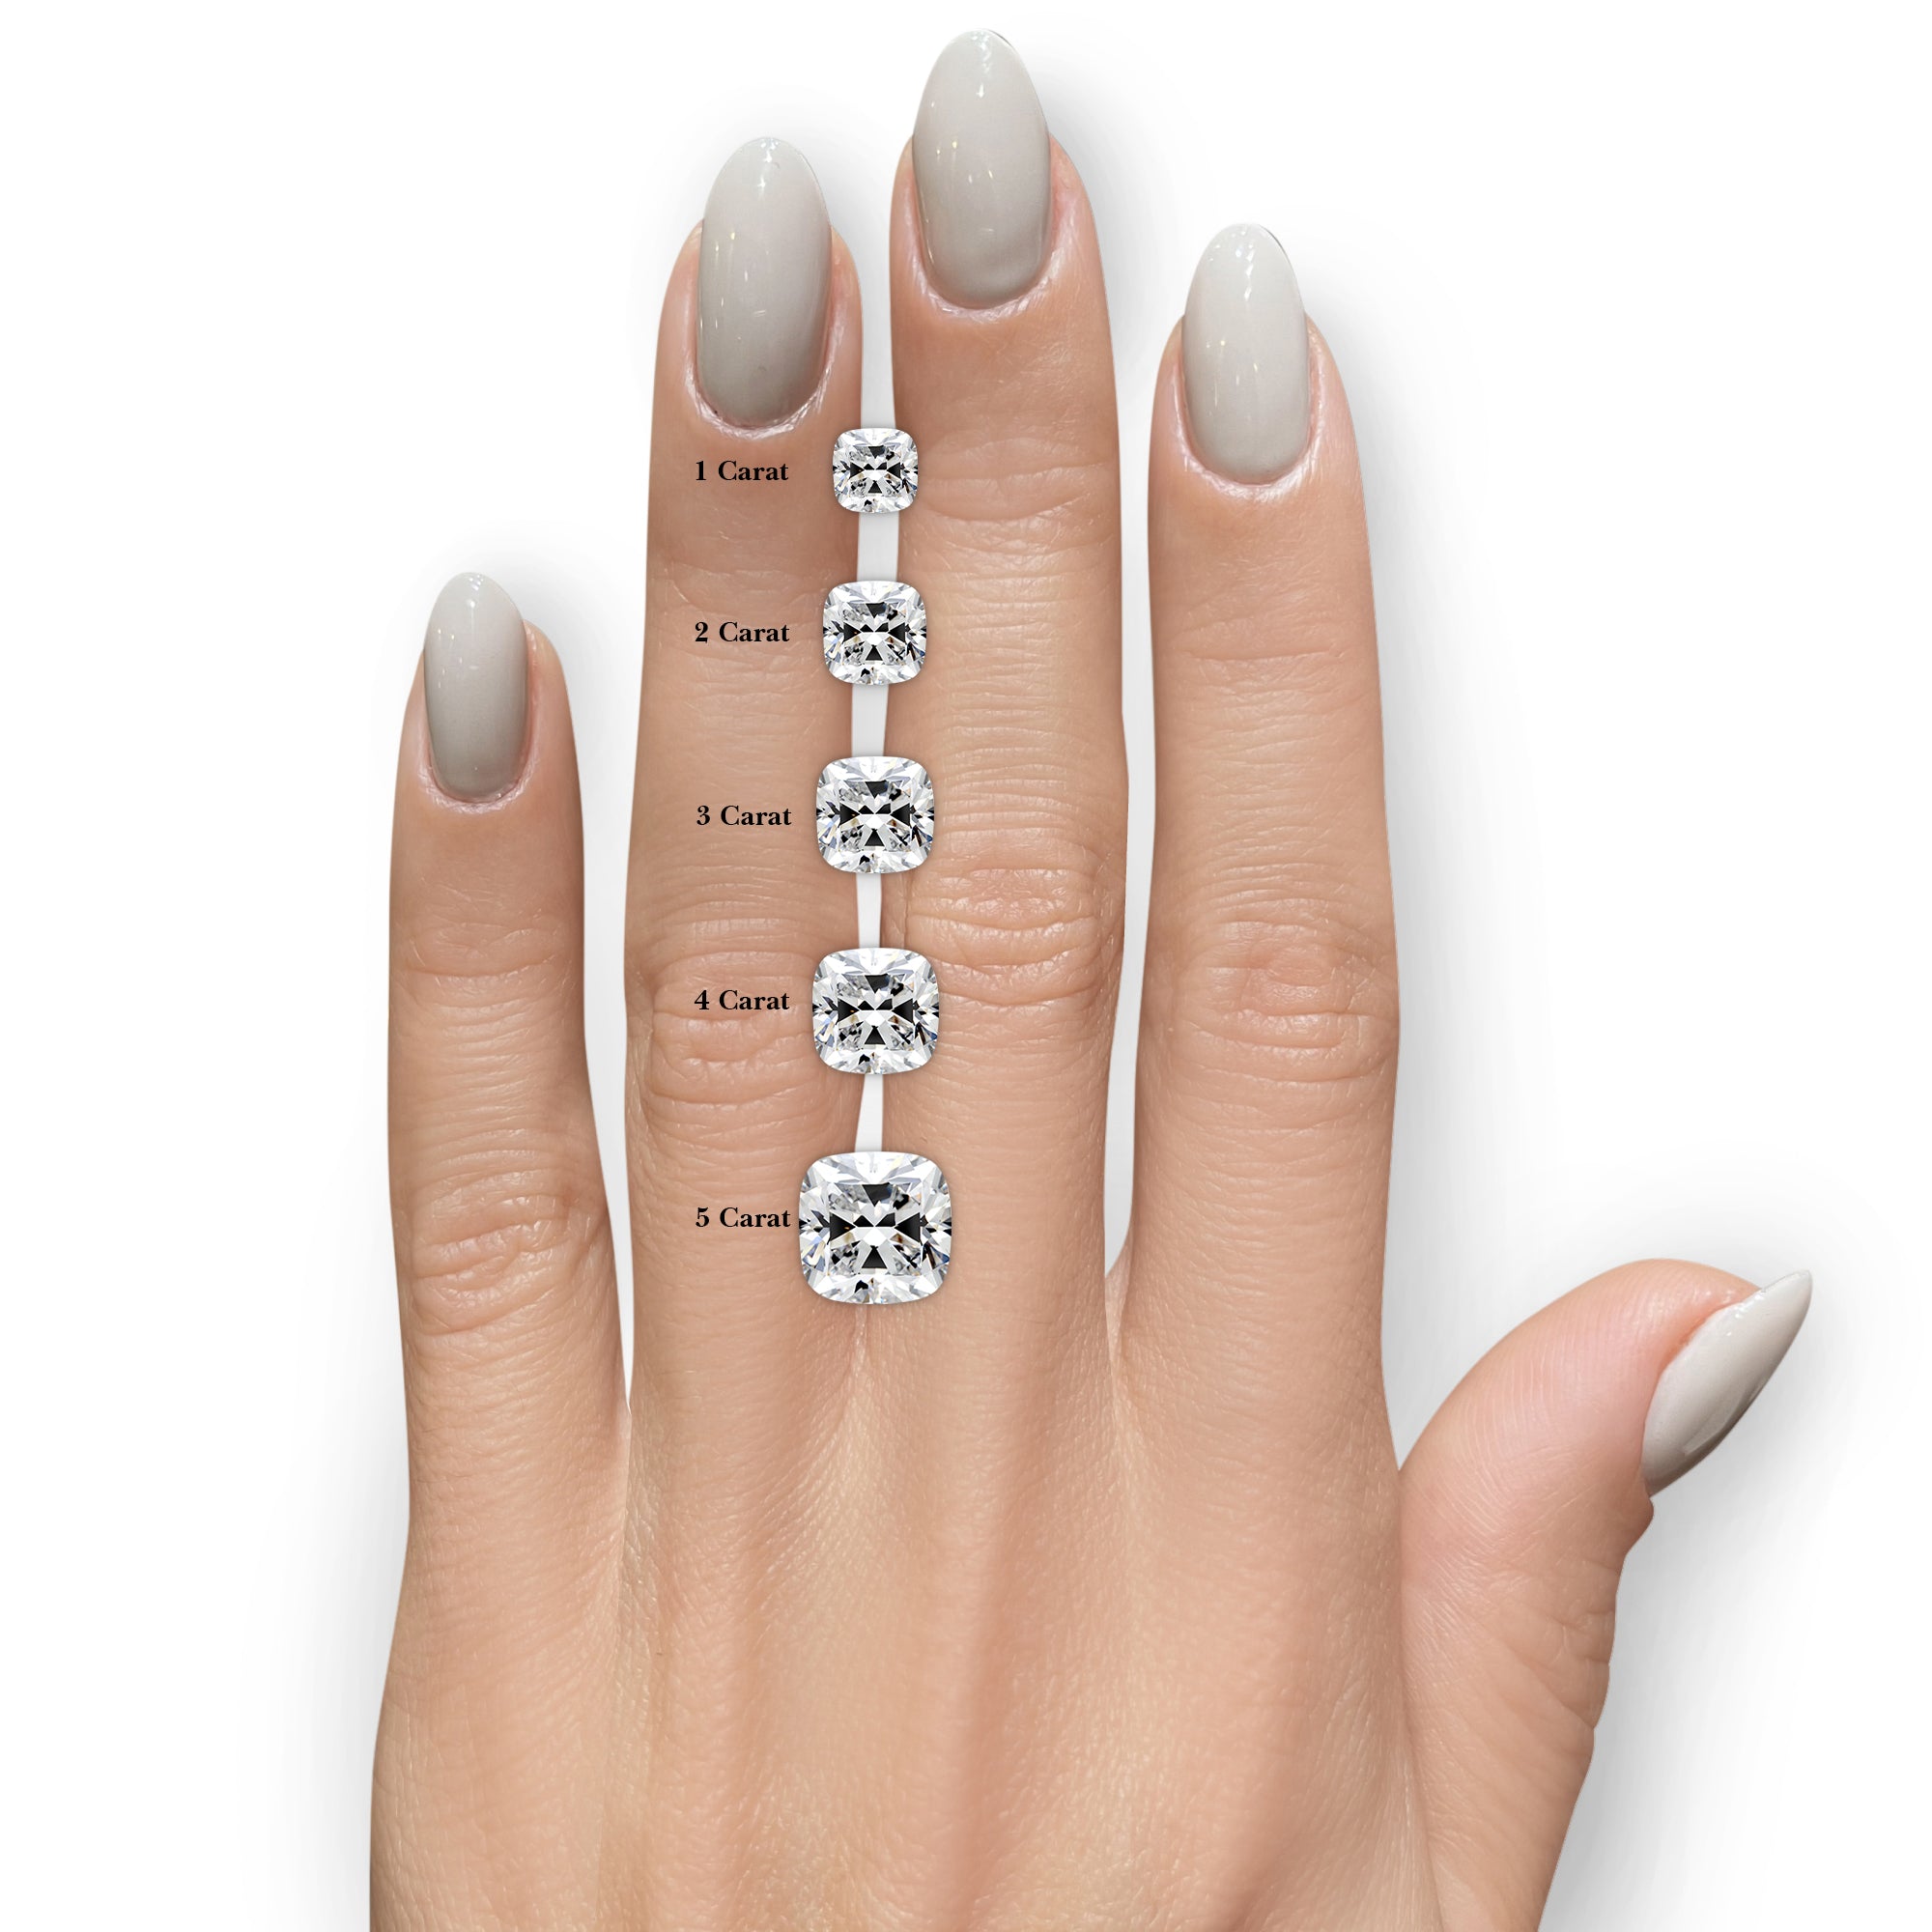 Bailey Diamond Engagement Ring -14K White Gold